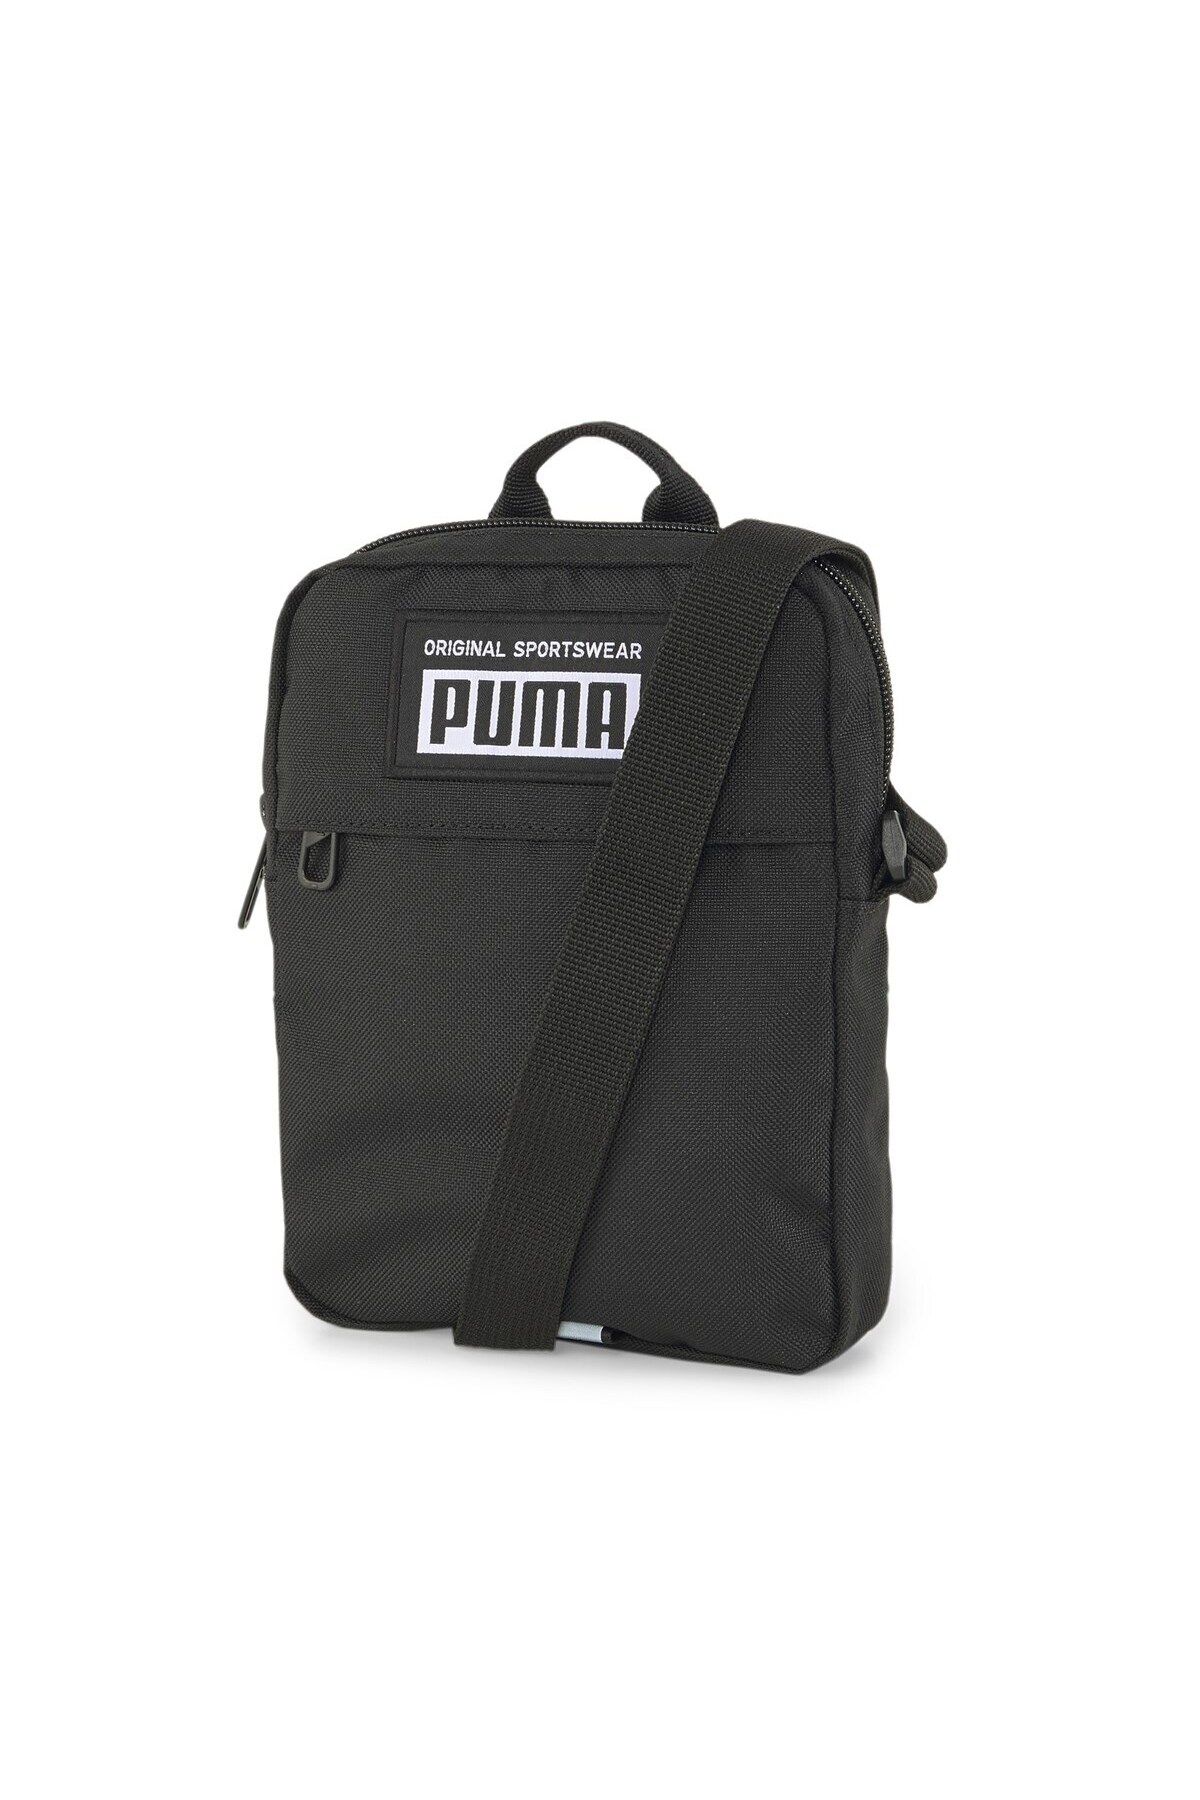 Puma Academy Portable07913501